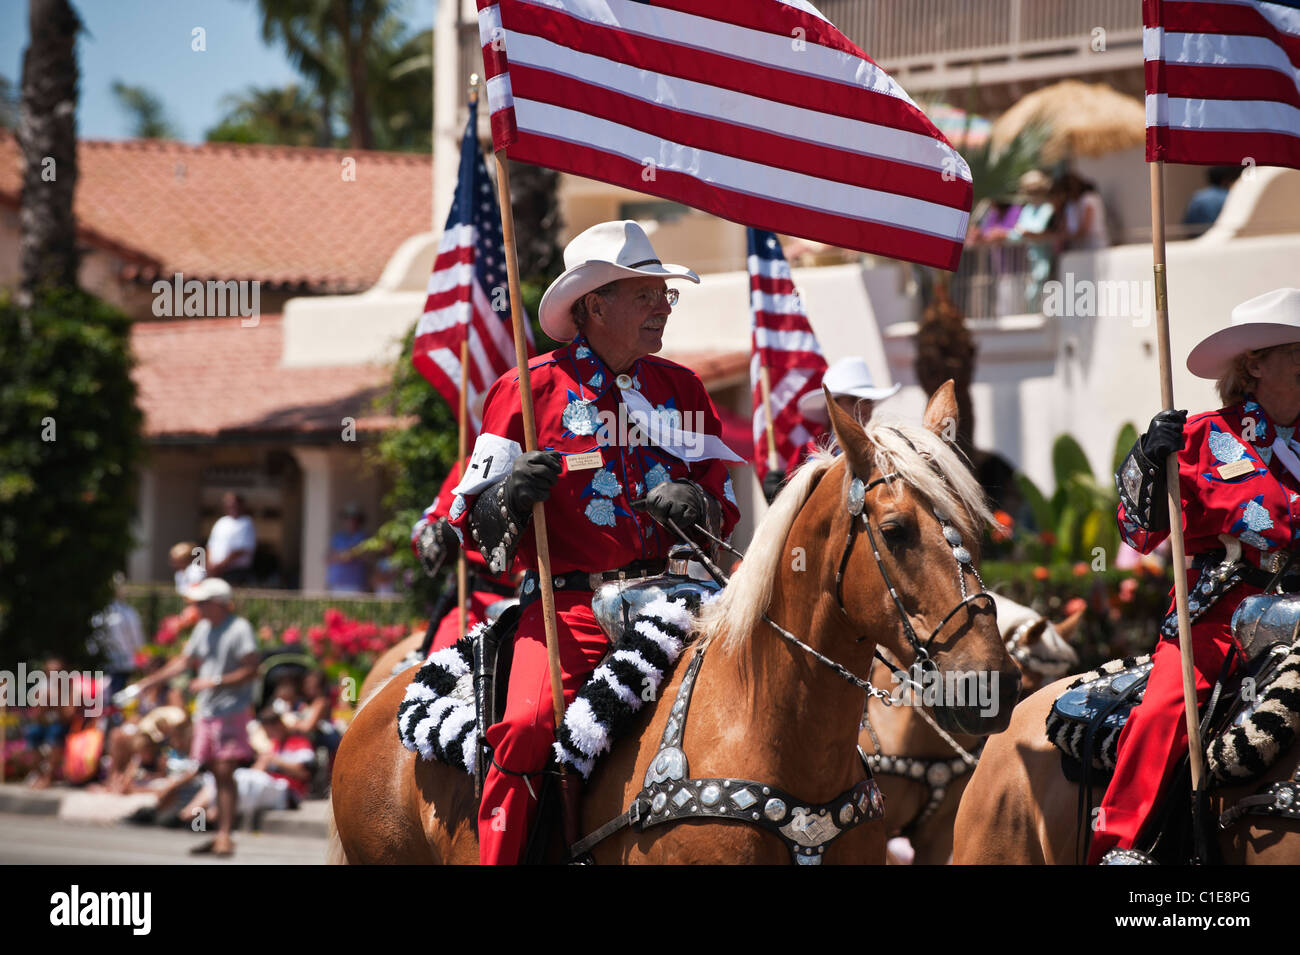 Horse riders with flags in Fiesta parade, Santa Barbara, California